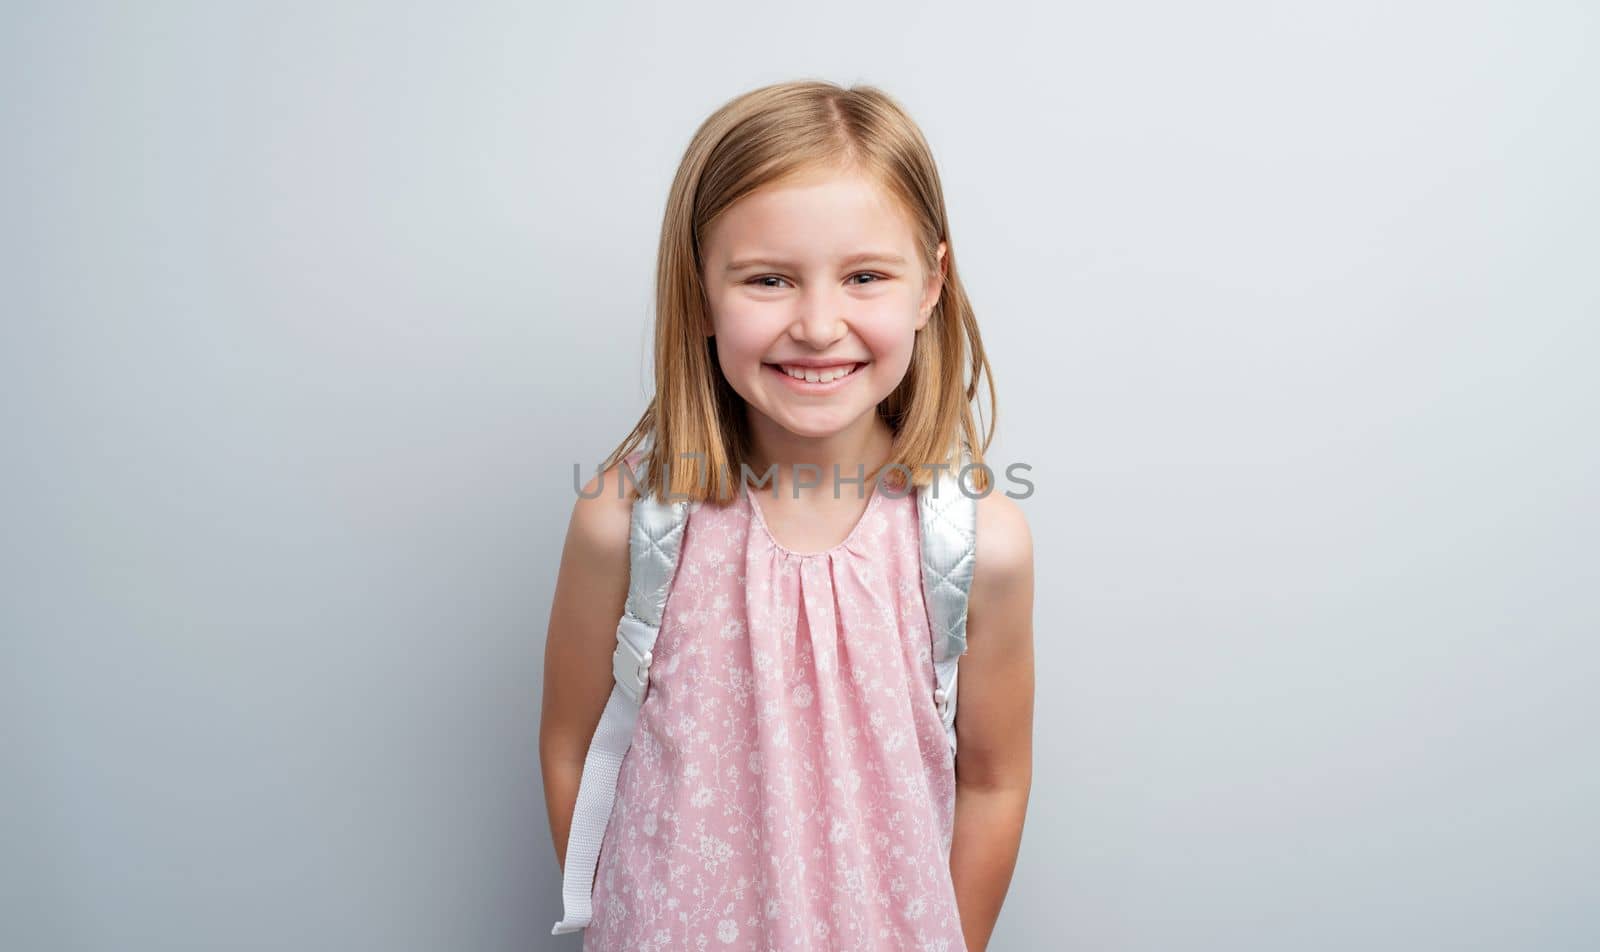 Schoolgirl with backpack posing on gray background